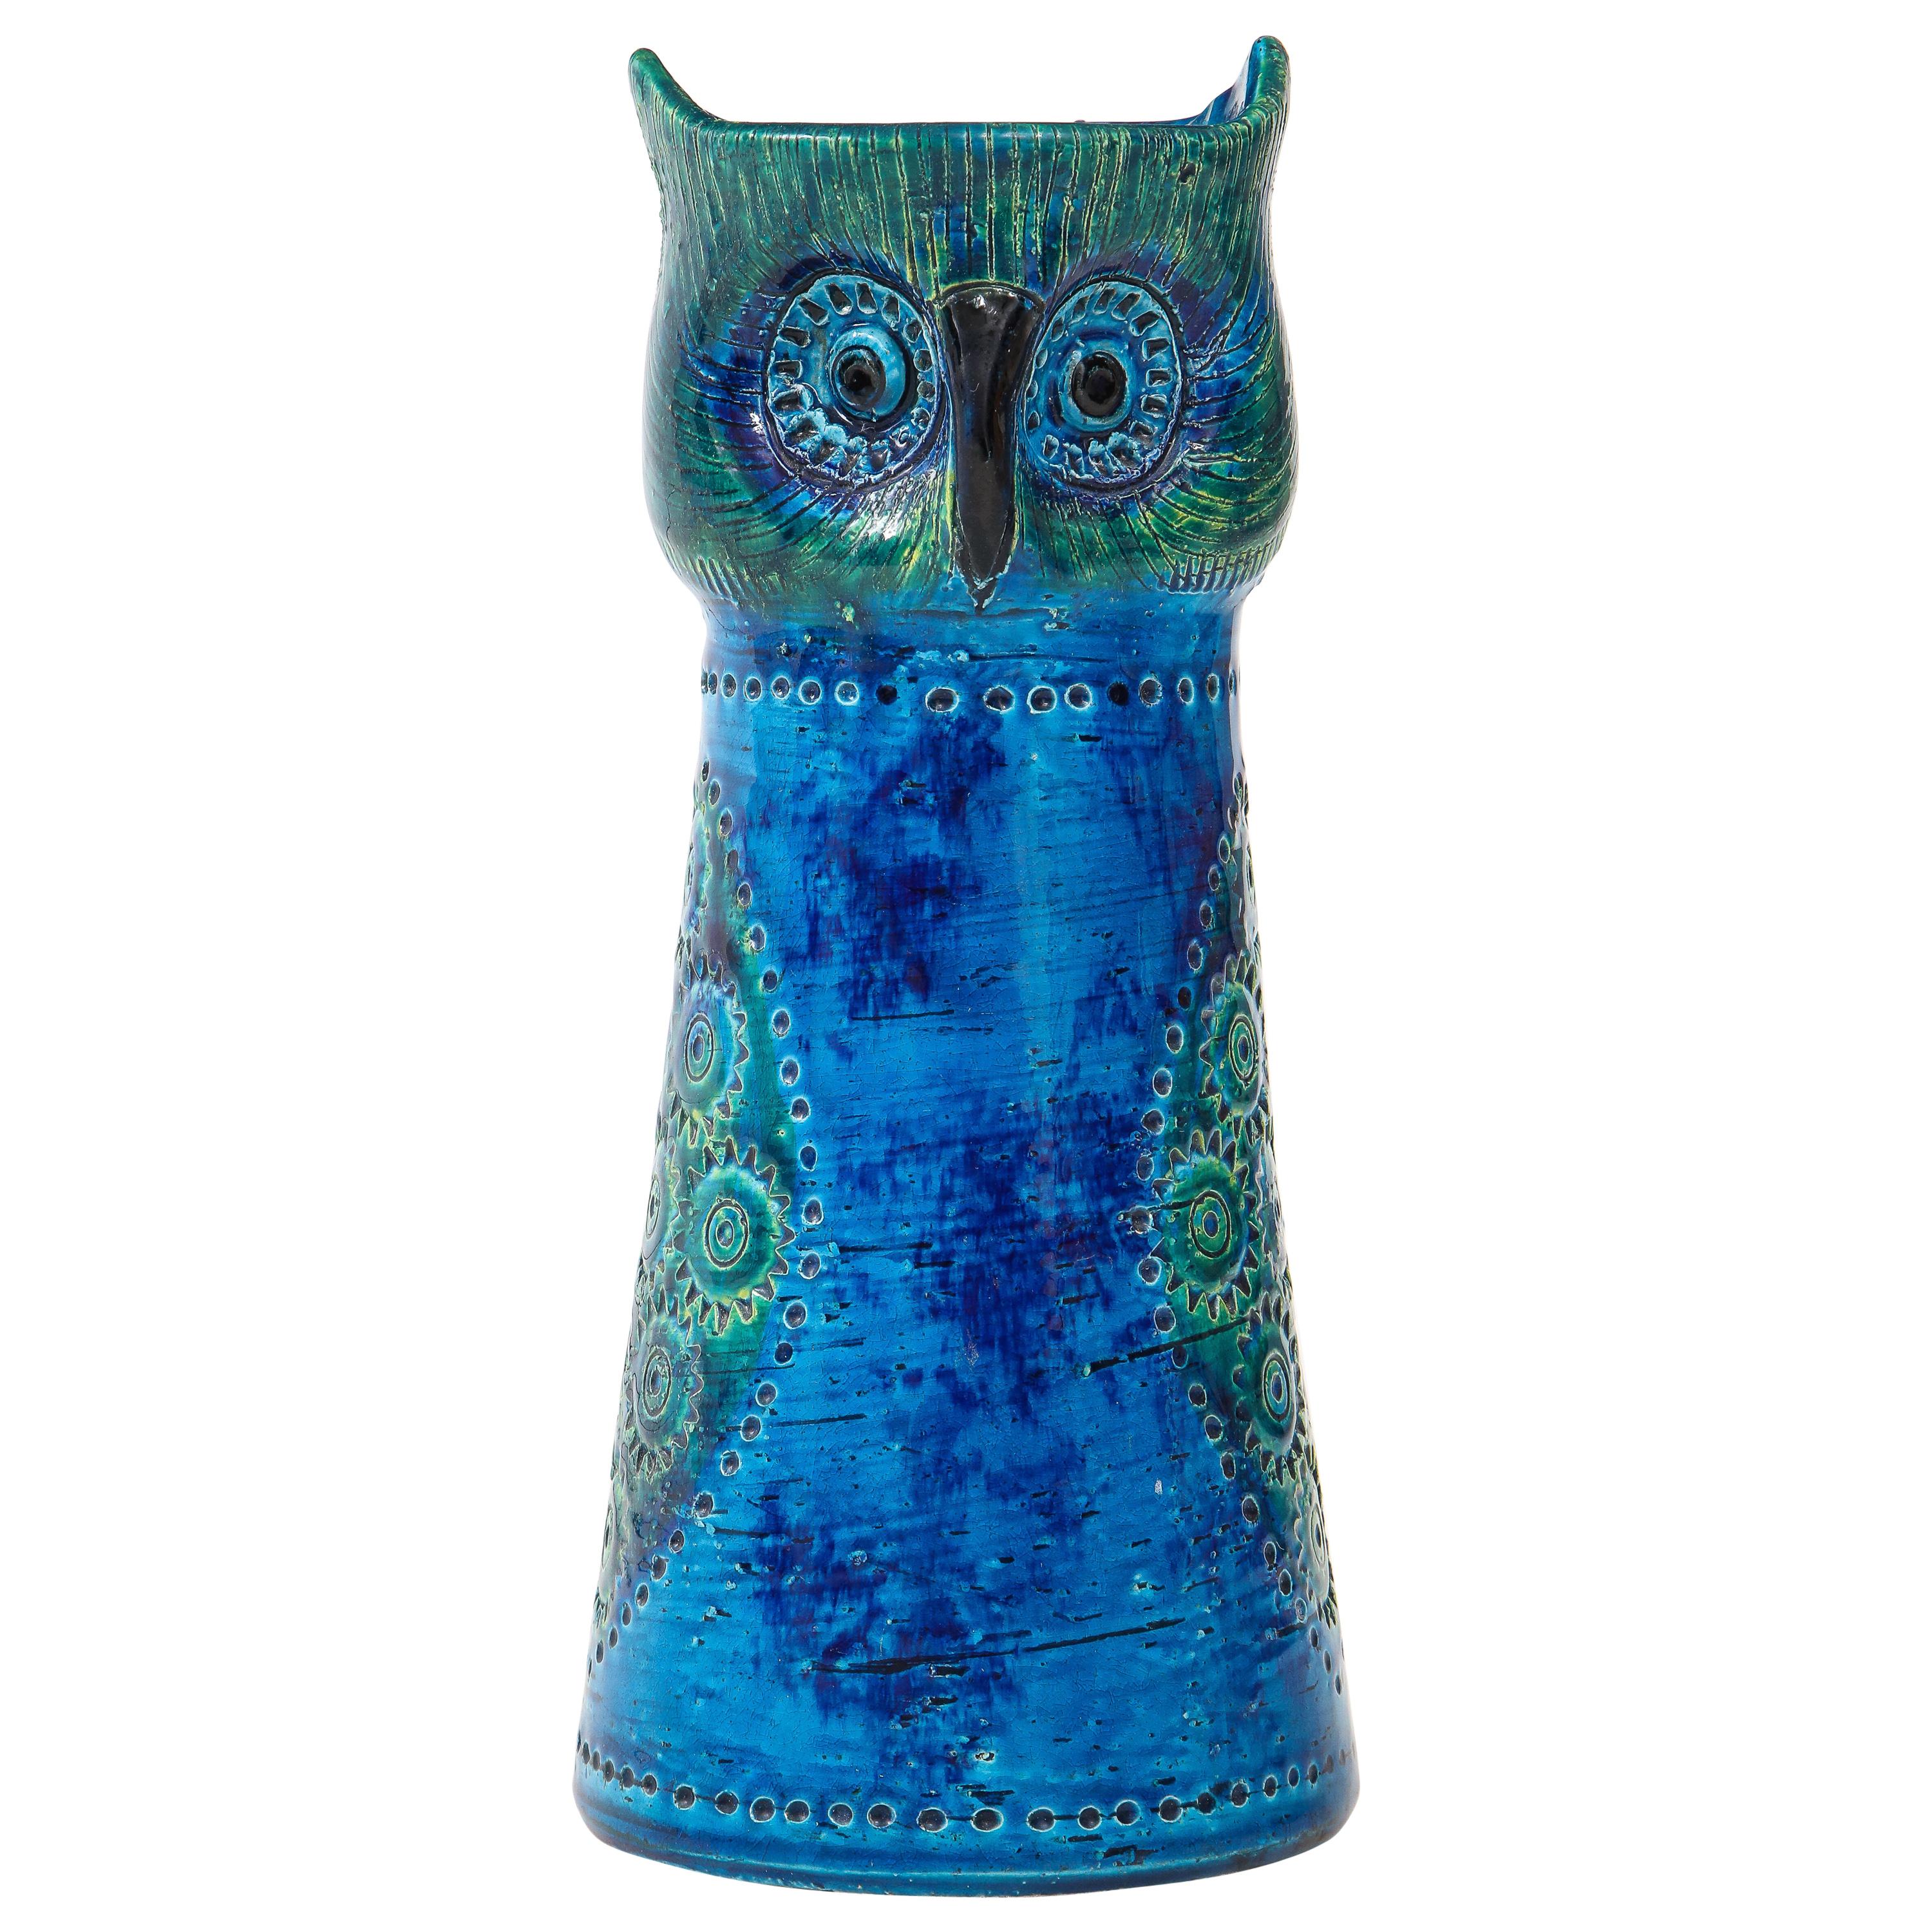 Aldo Londi for Bitossi Pottery Owl